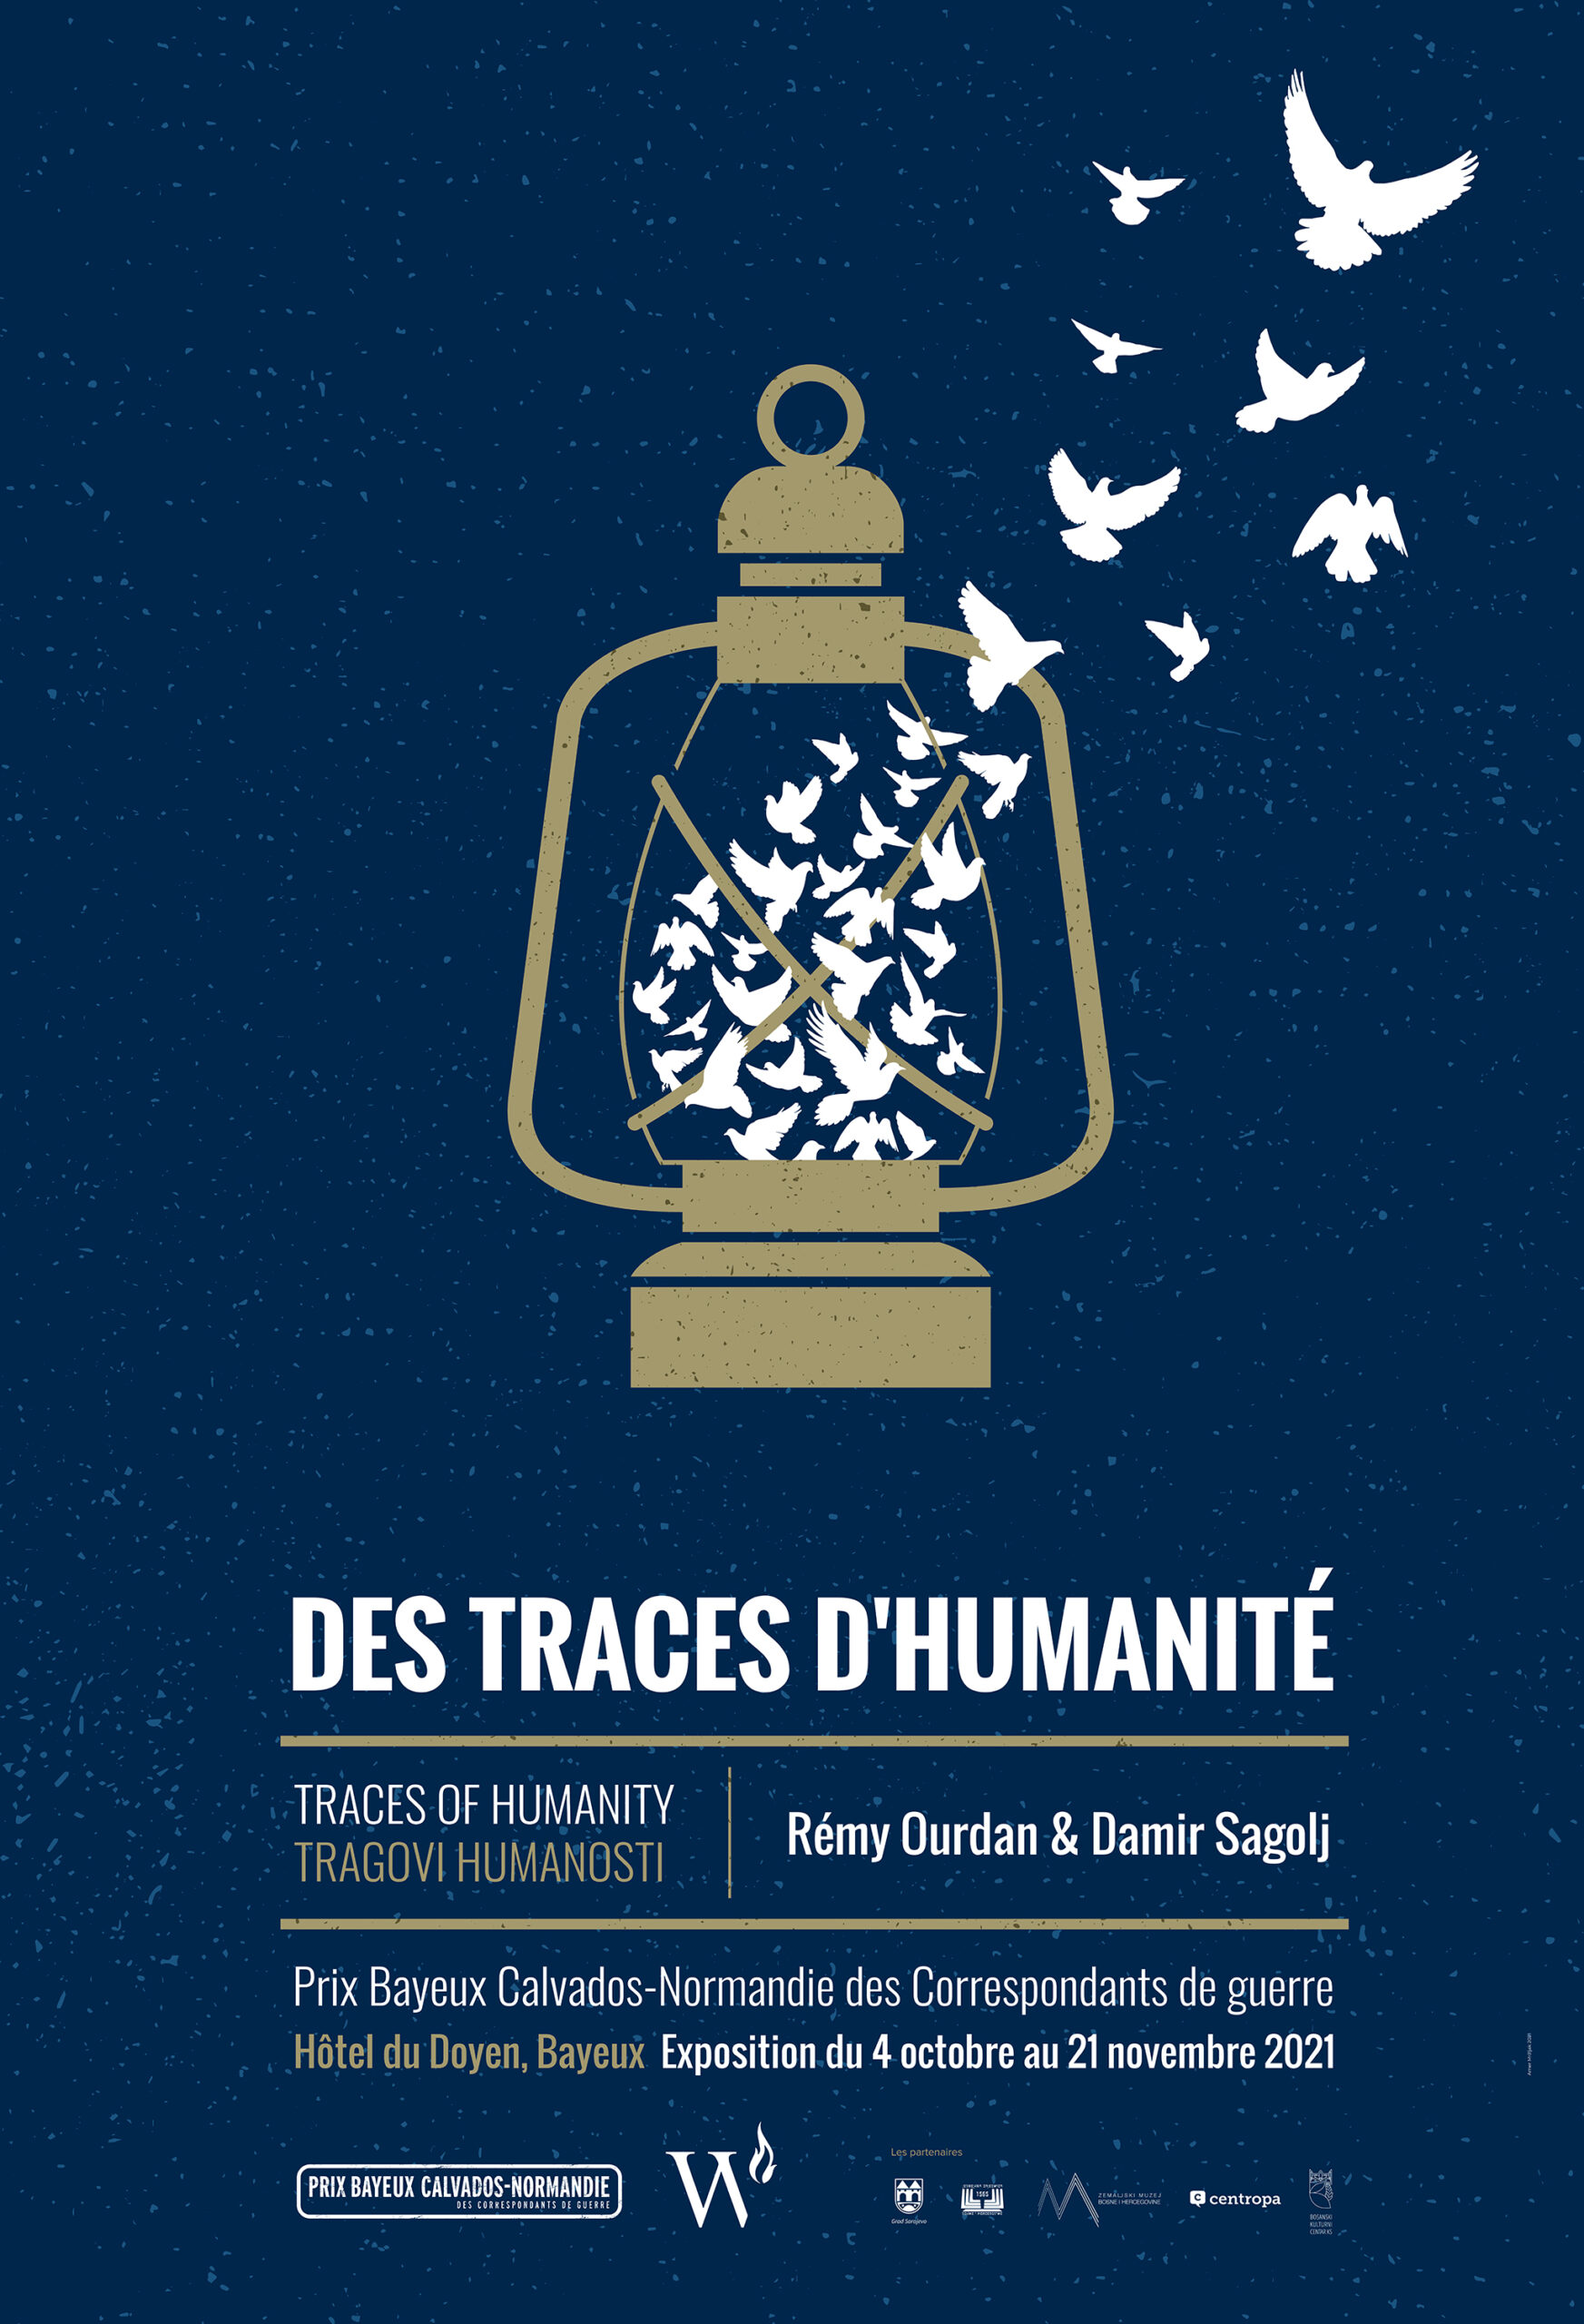 Multimedijalna Izložba “Tragovi humanosti” autora Rémy Ourdana i Damira Šagolja u francuskom gradu Bayeux od 4. 10. do 21. 11. 2021.